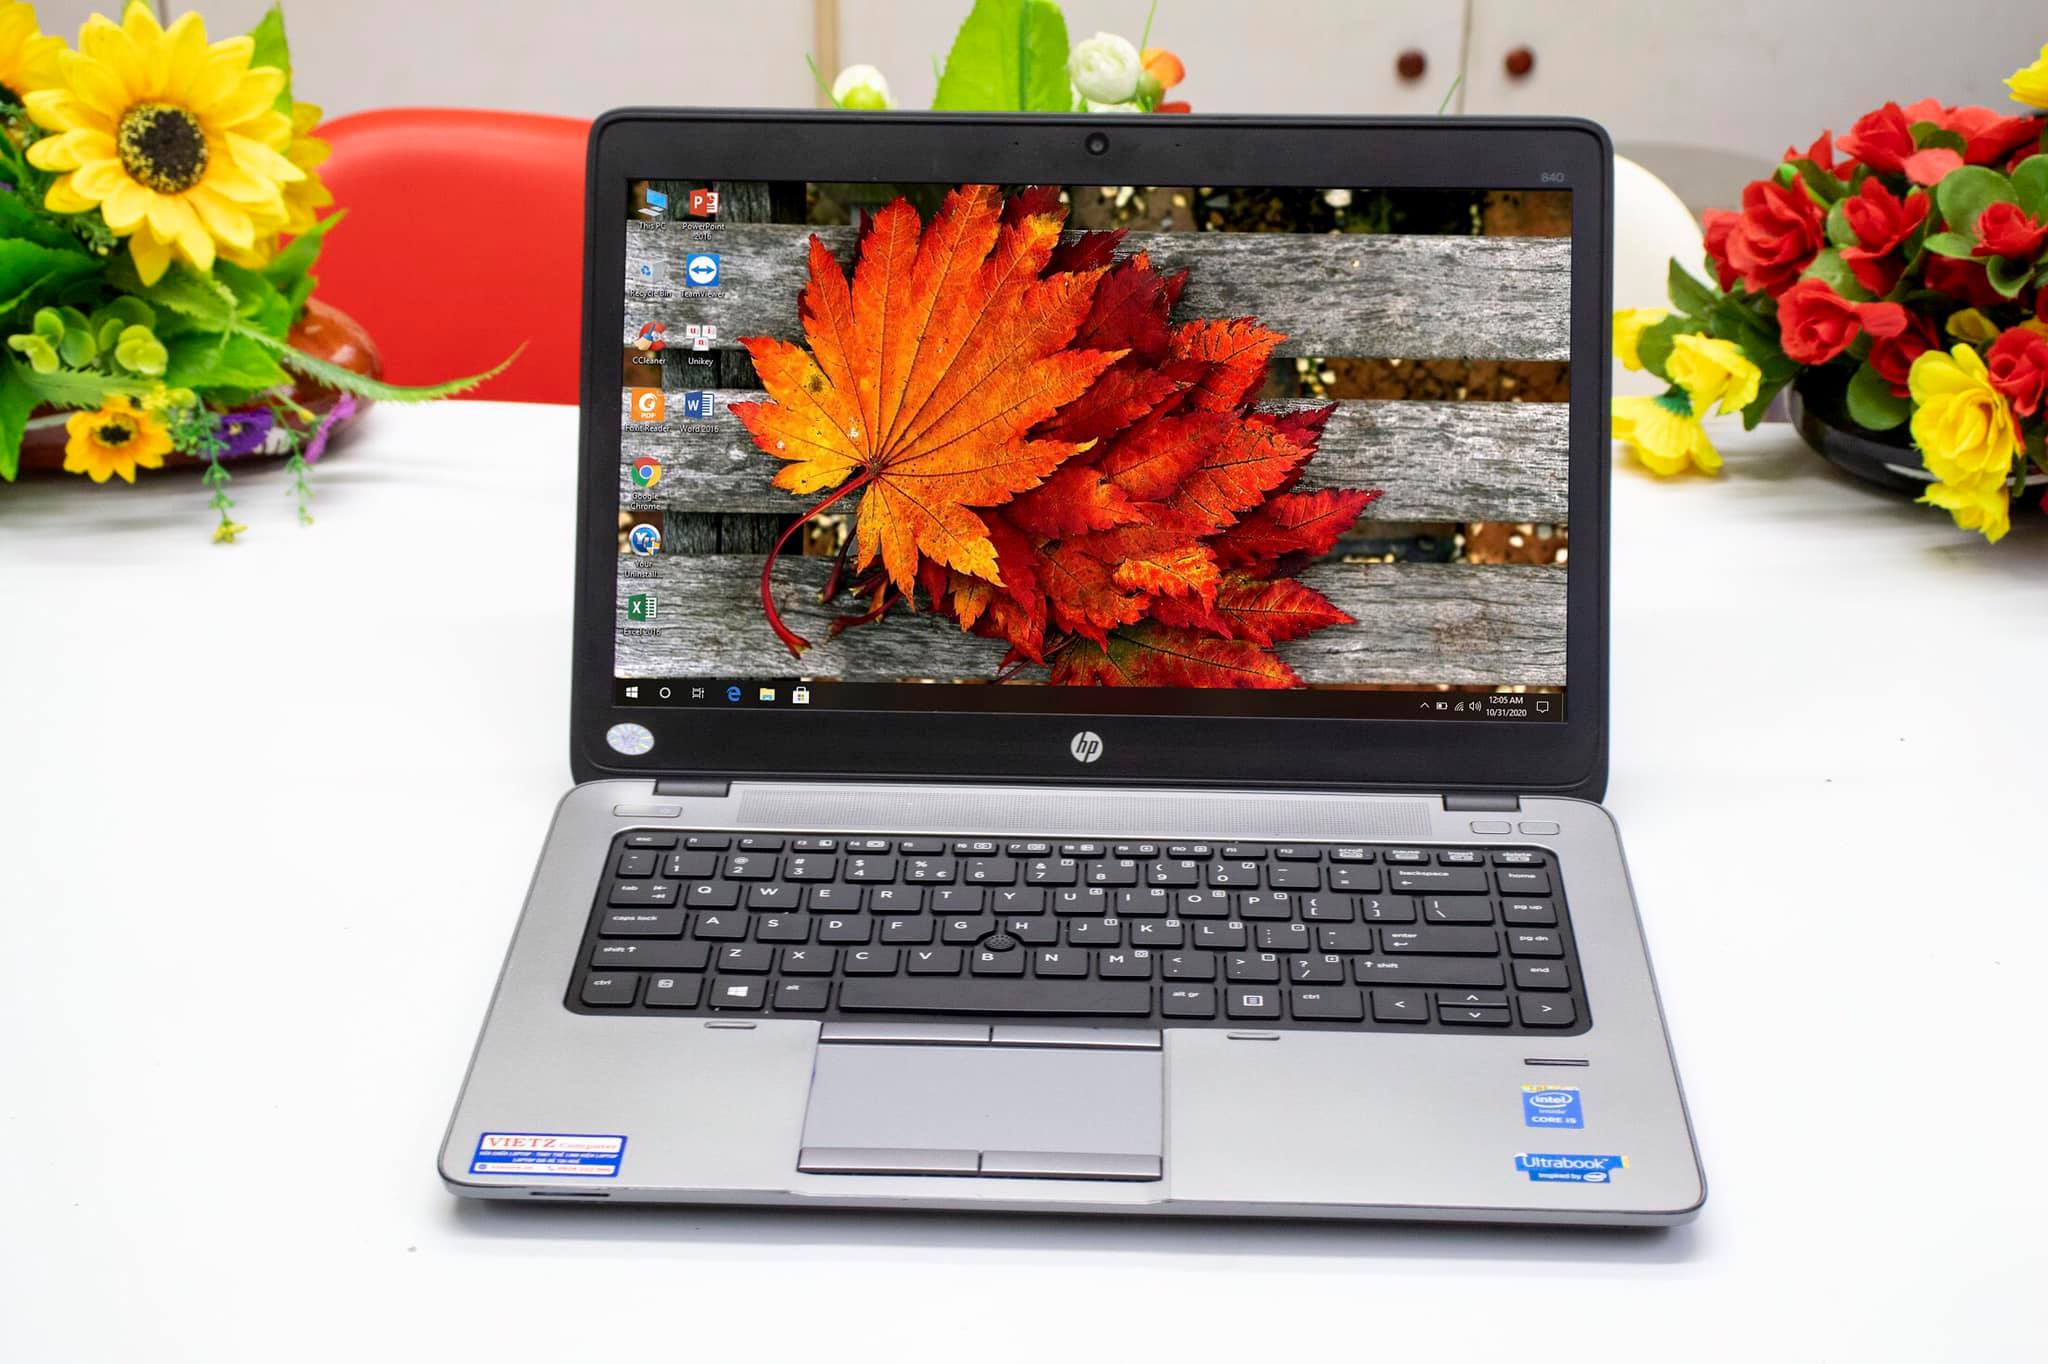 HP Elitebook 840 G1 - hoangsonstore.com laptop 7 triệu đồng